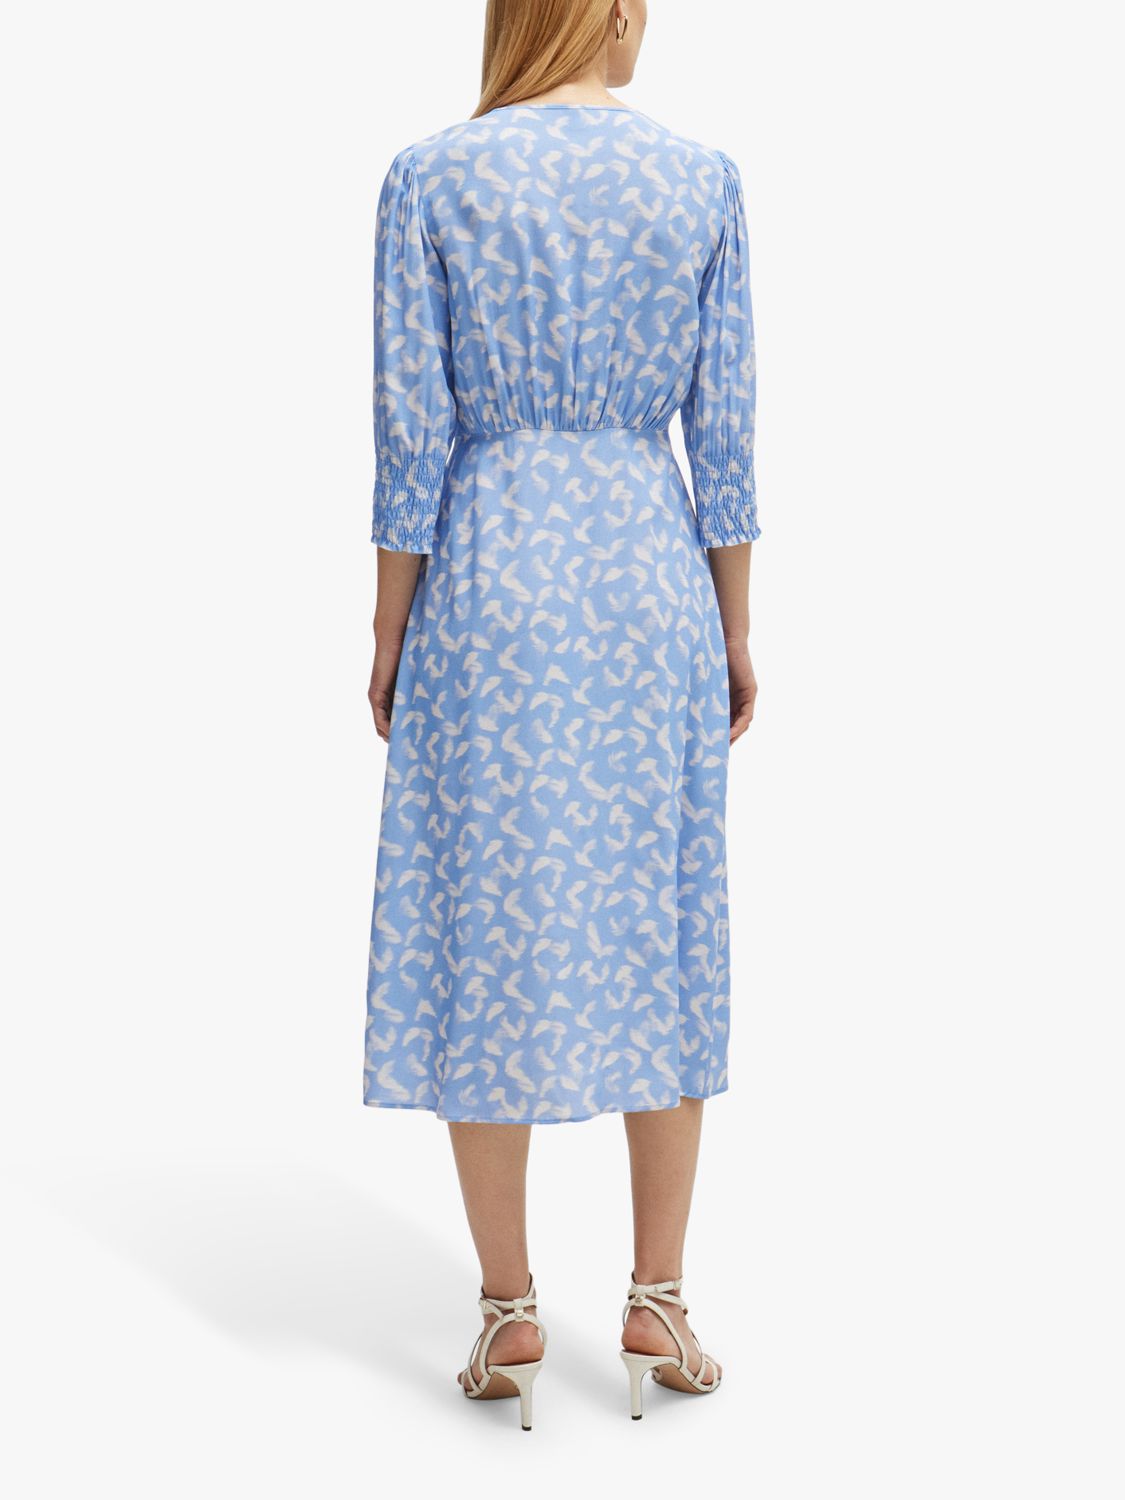 BOSS Daflori Abstract Print Midi A-Line Dress, Blue/White, 12